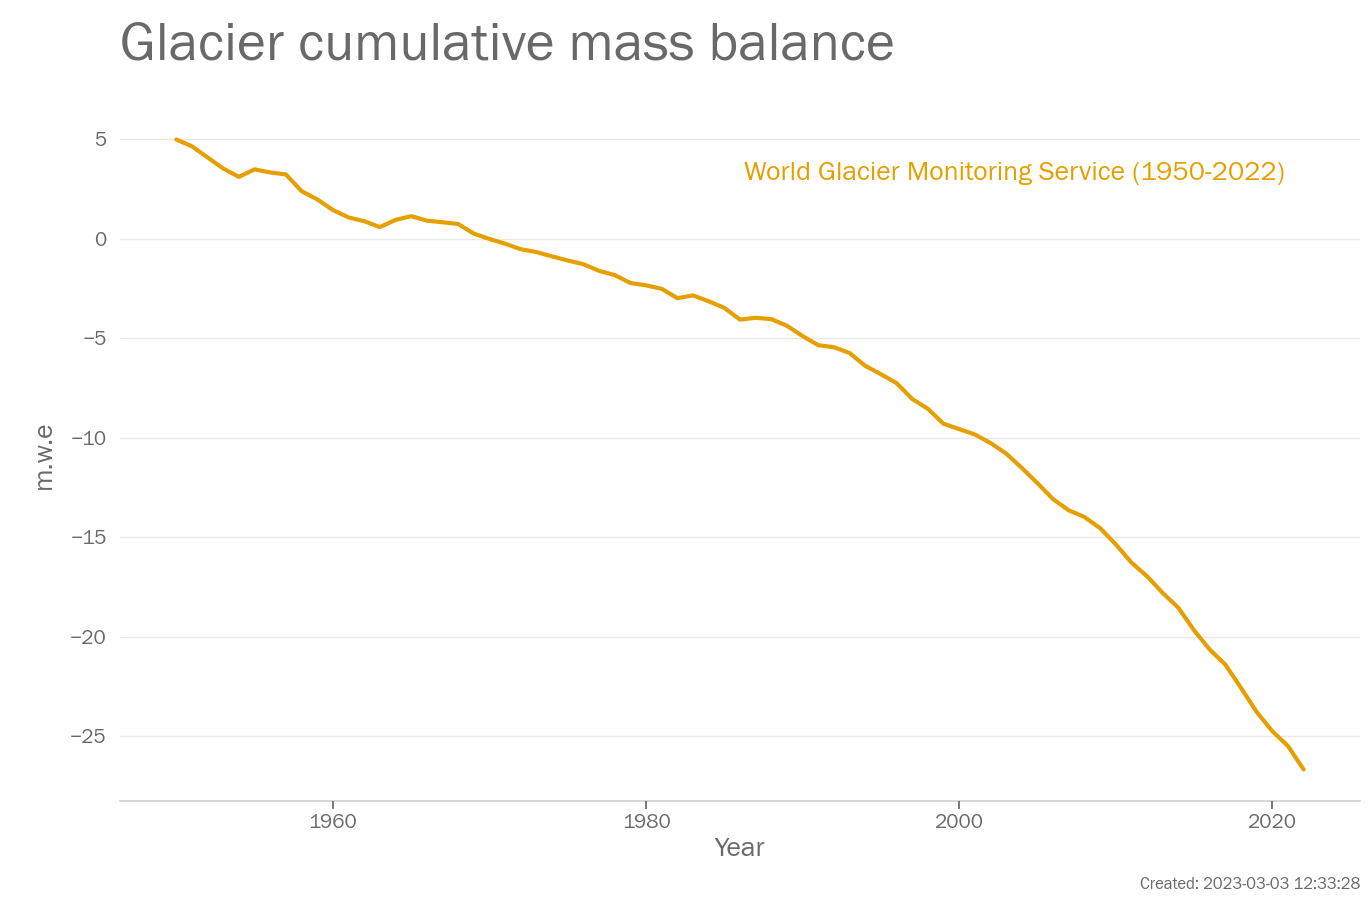 Annual Mountain glacier cumulative mass balance (m w.e.)  from 1950-2022. Data are from World Glacier Monitoring Service.